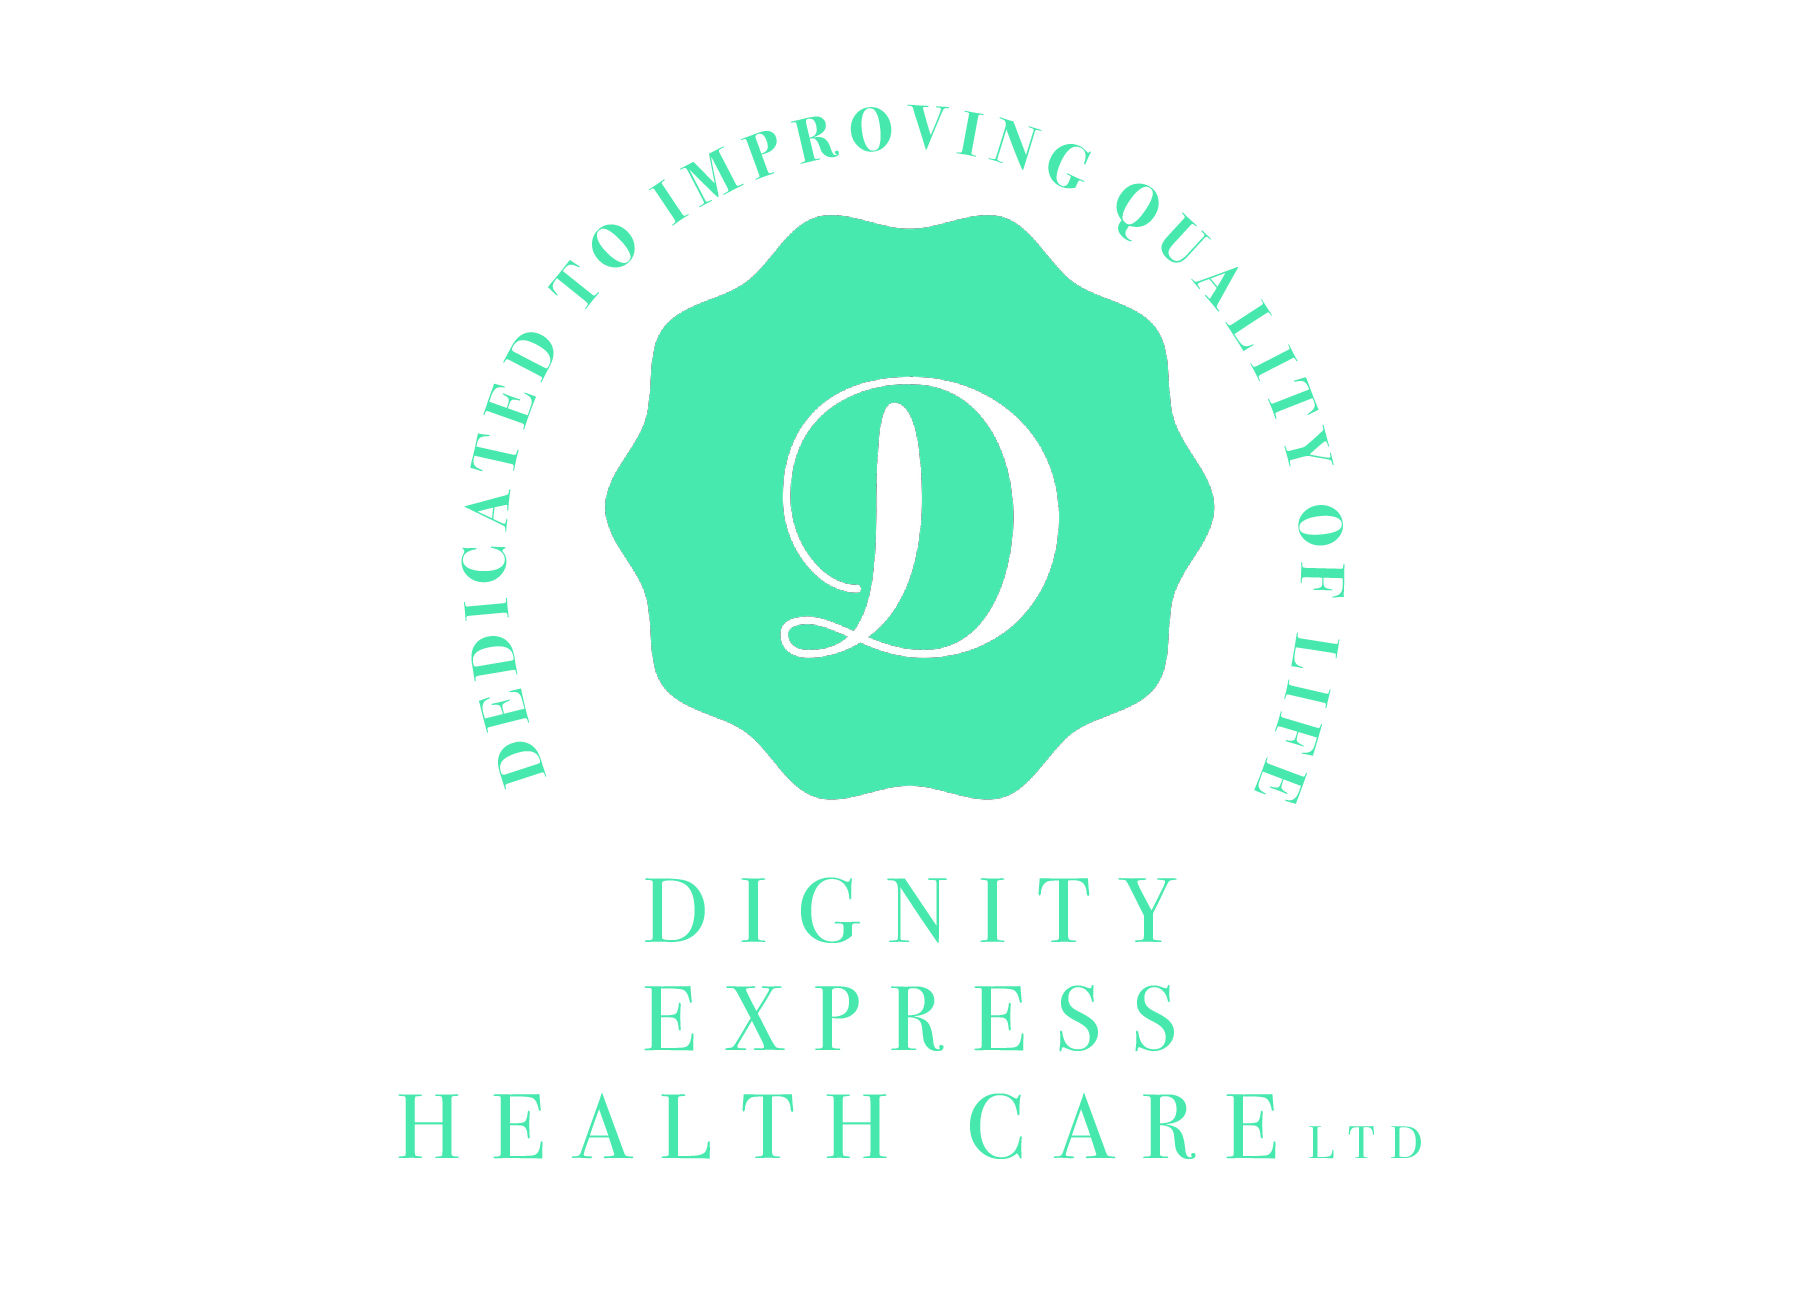 DIGNITY EXPRESS HEALTH CARE Ltd